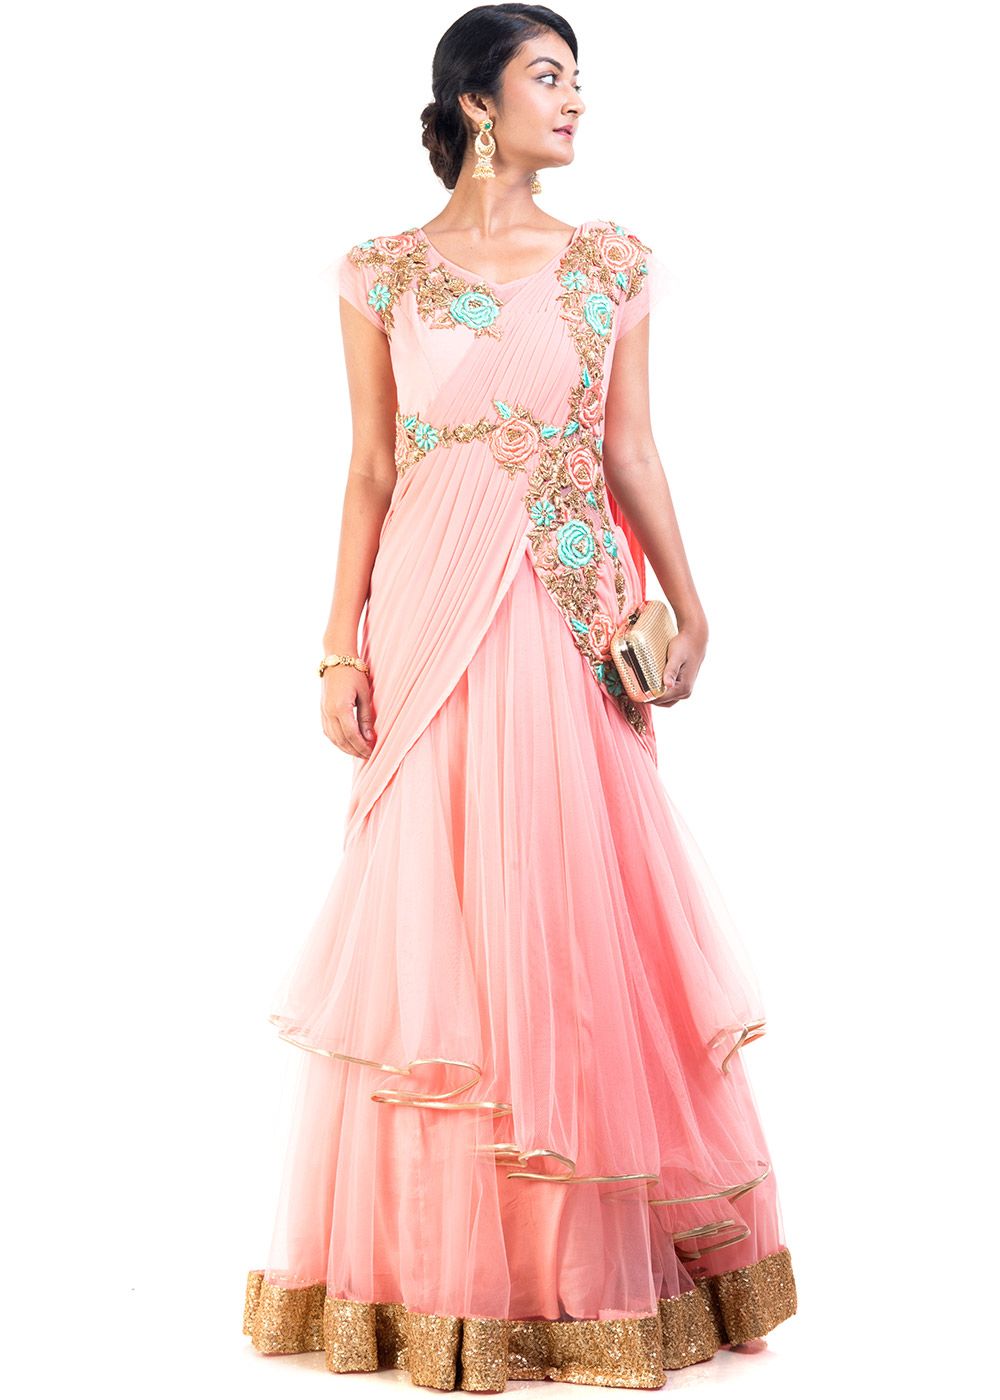 Sonaakshi Raaj's Turquoise Lycra Net Saree Gown